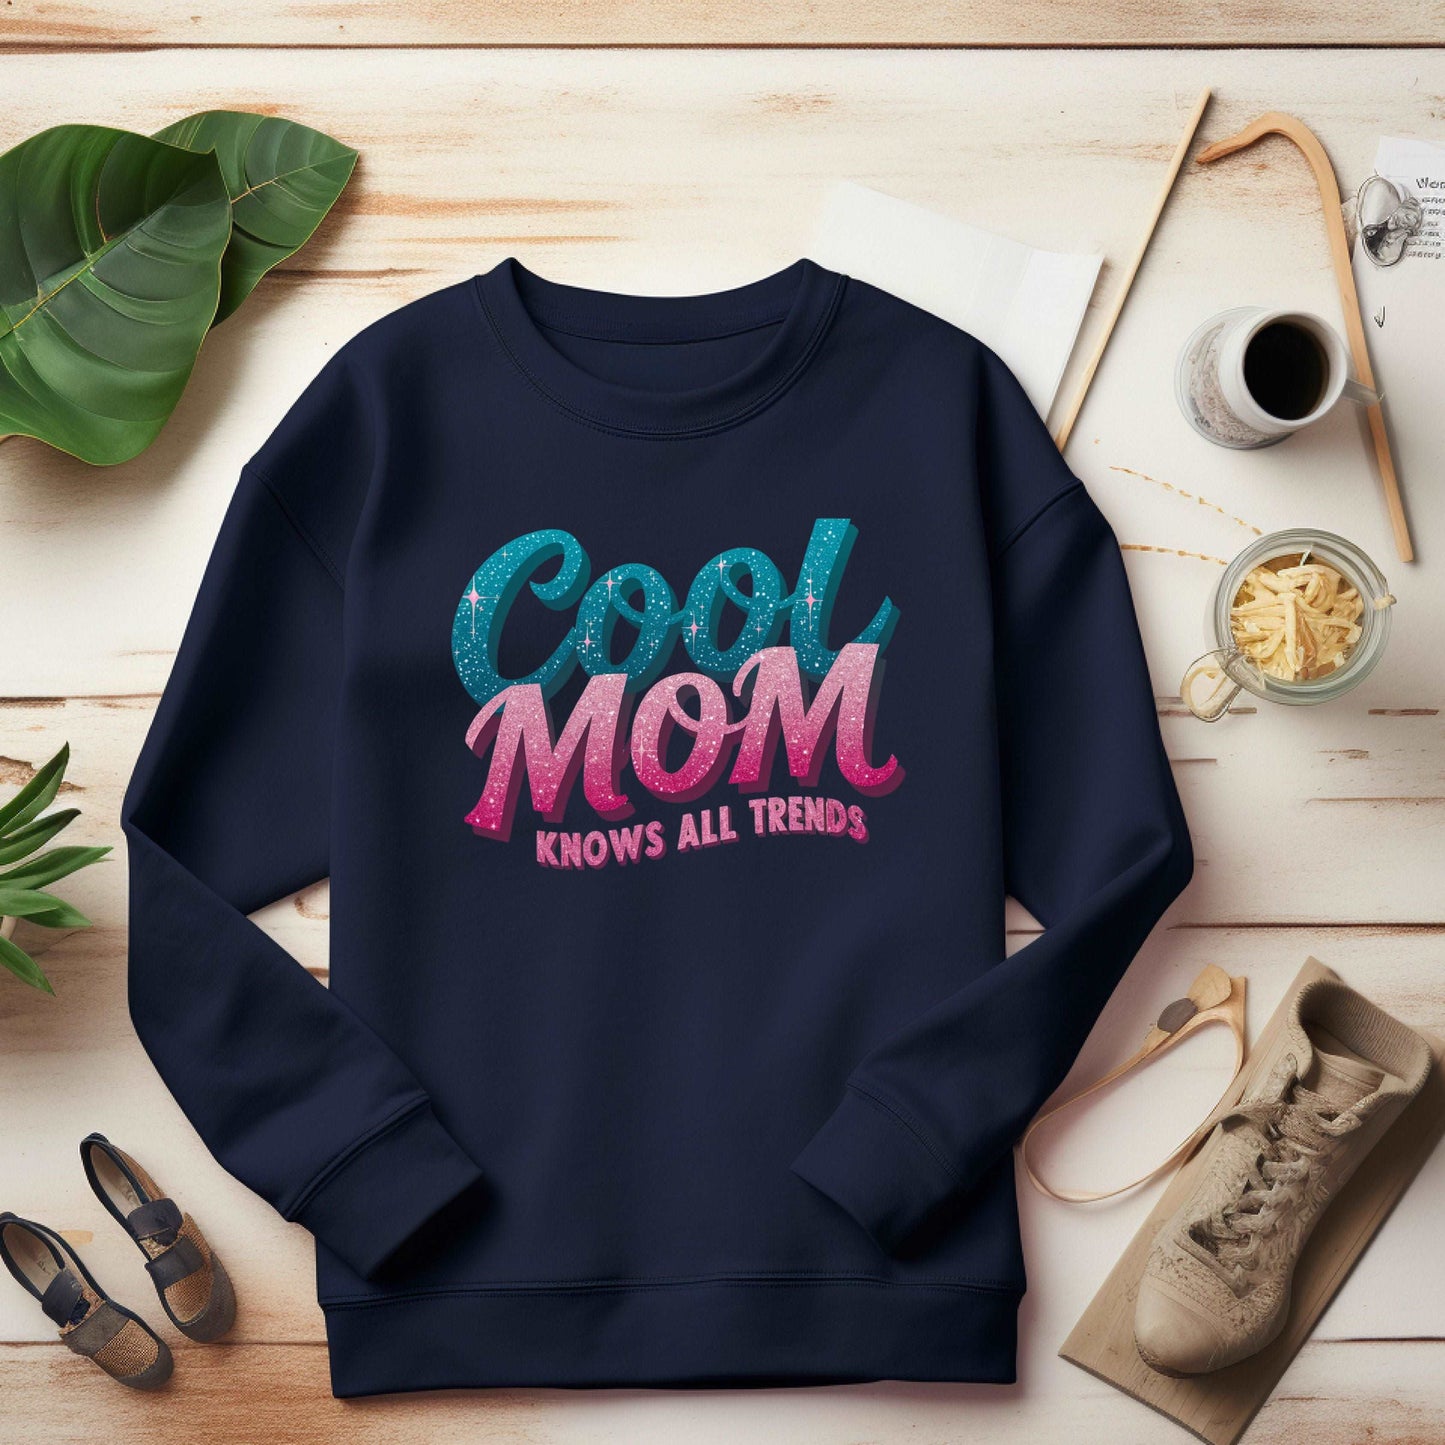 Cool Mom Navy Sweatshirt